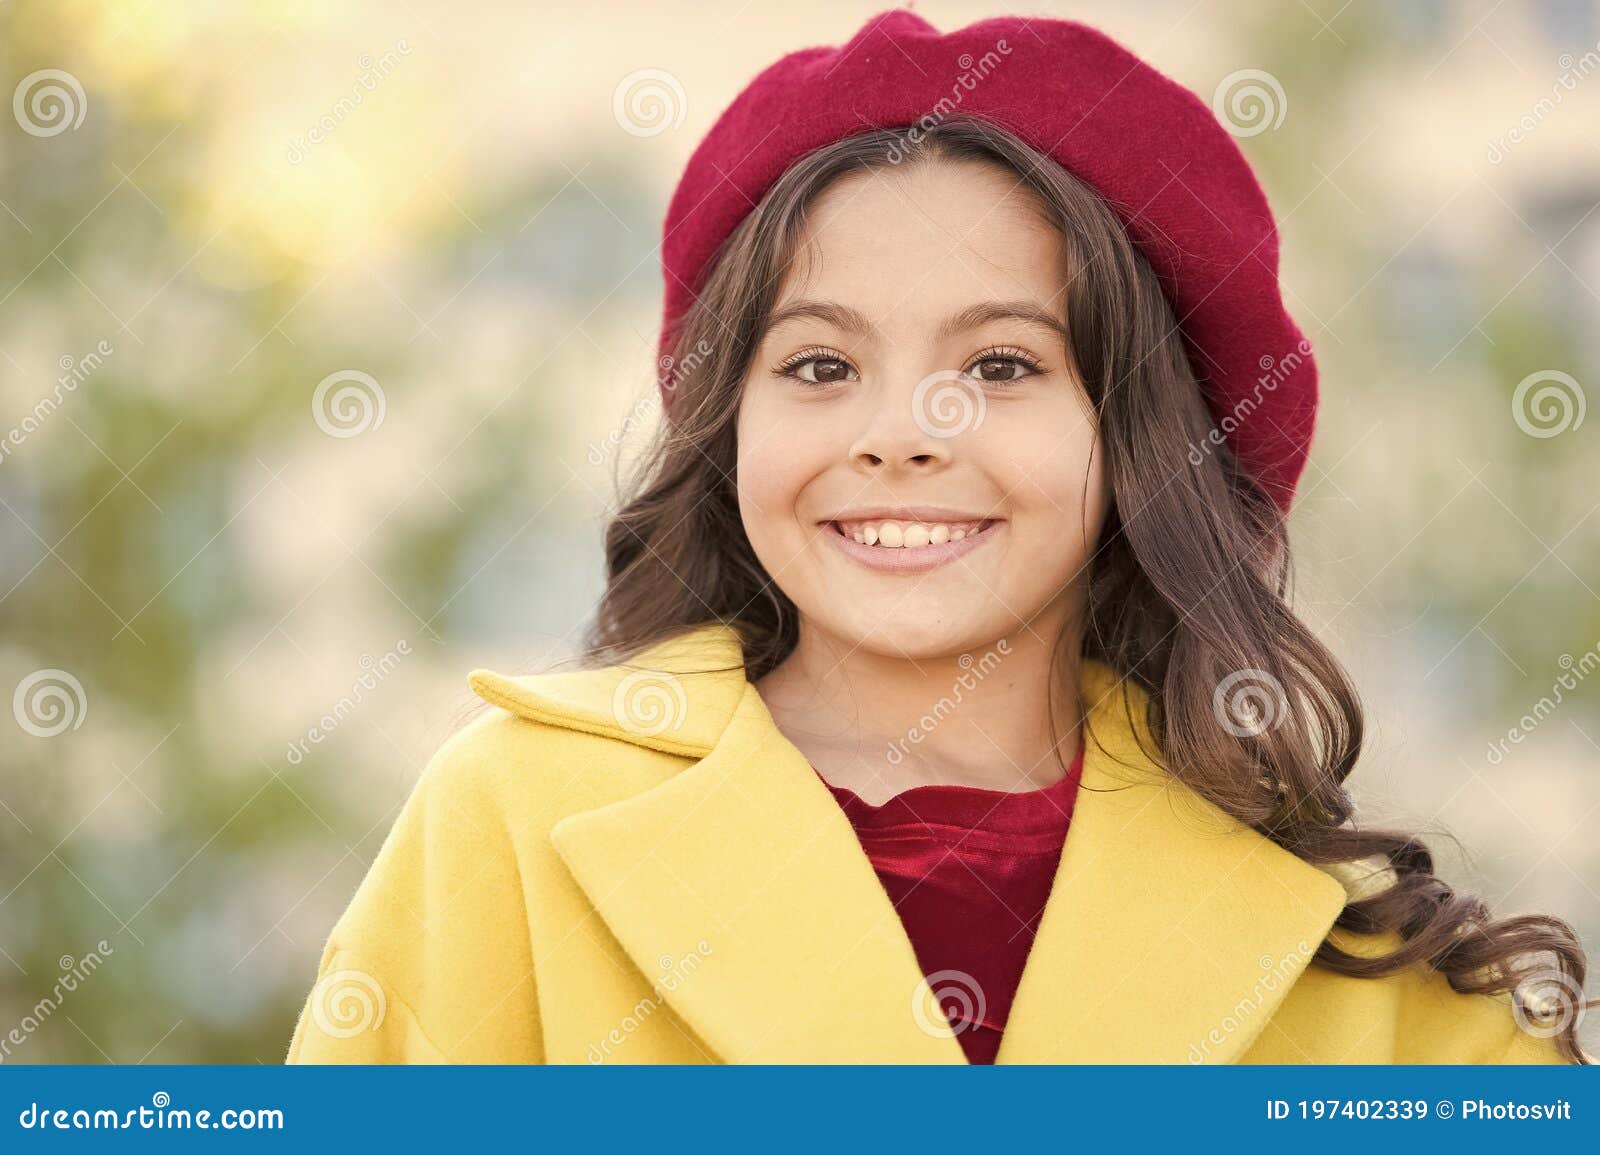 Little parisian. Fancy girl. Kid little cute girl smiling face posing hat defocused background. Fashionable hat accessory. Autumn fashion. Fashion accessory for little kids. Fall fashion collection.